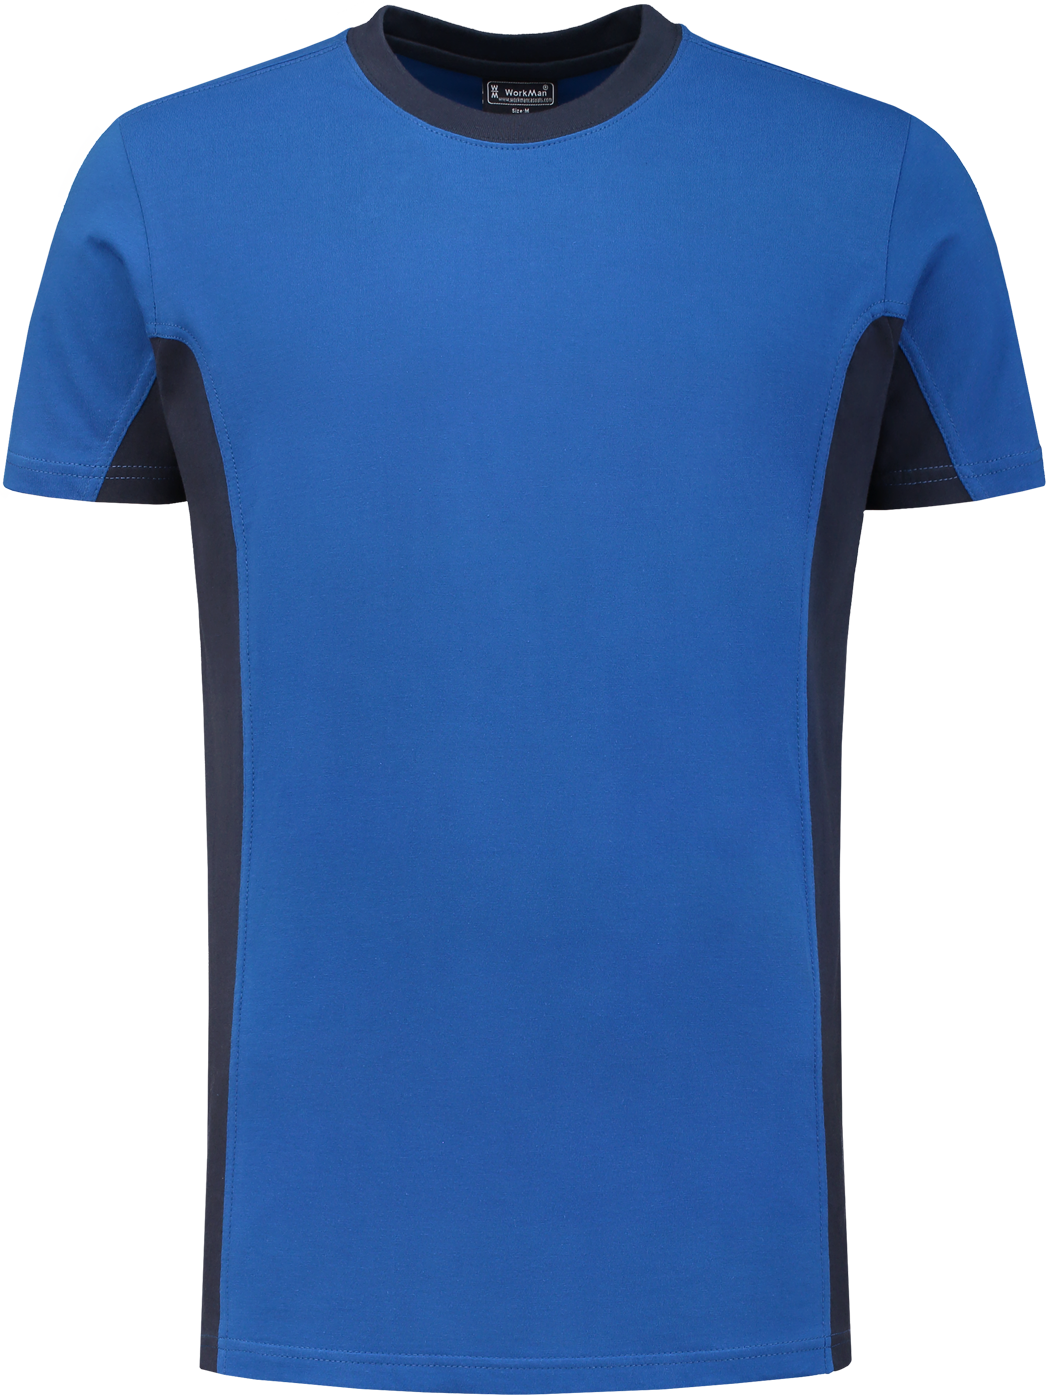 0404 T-Shirt Bi-Colour Royal Blue / Navy